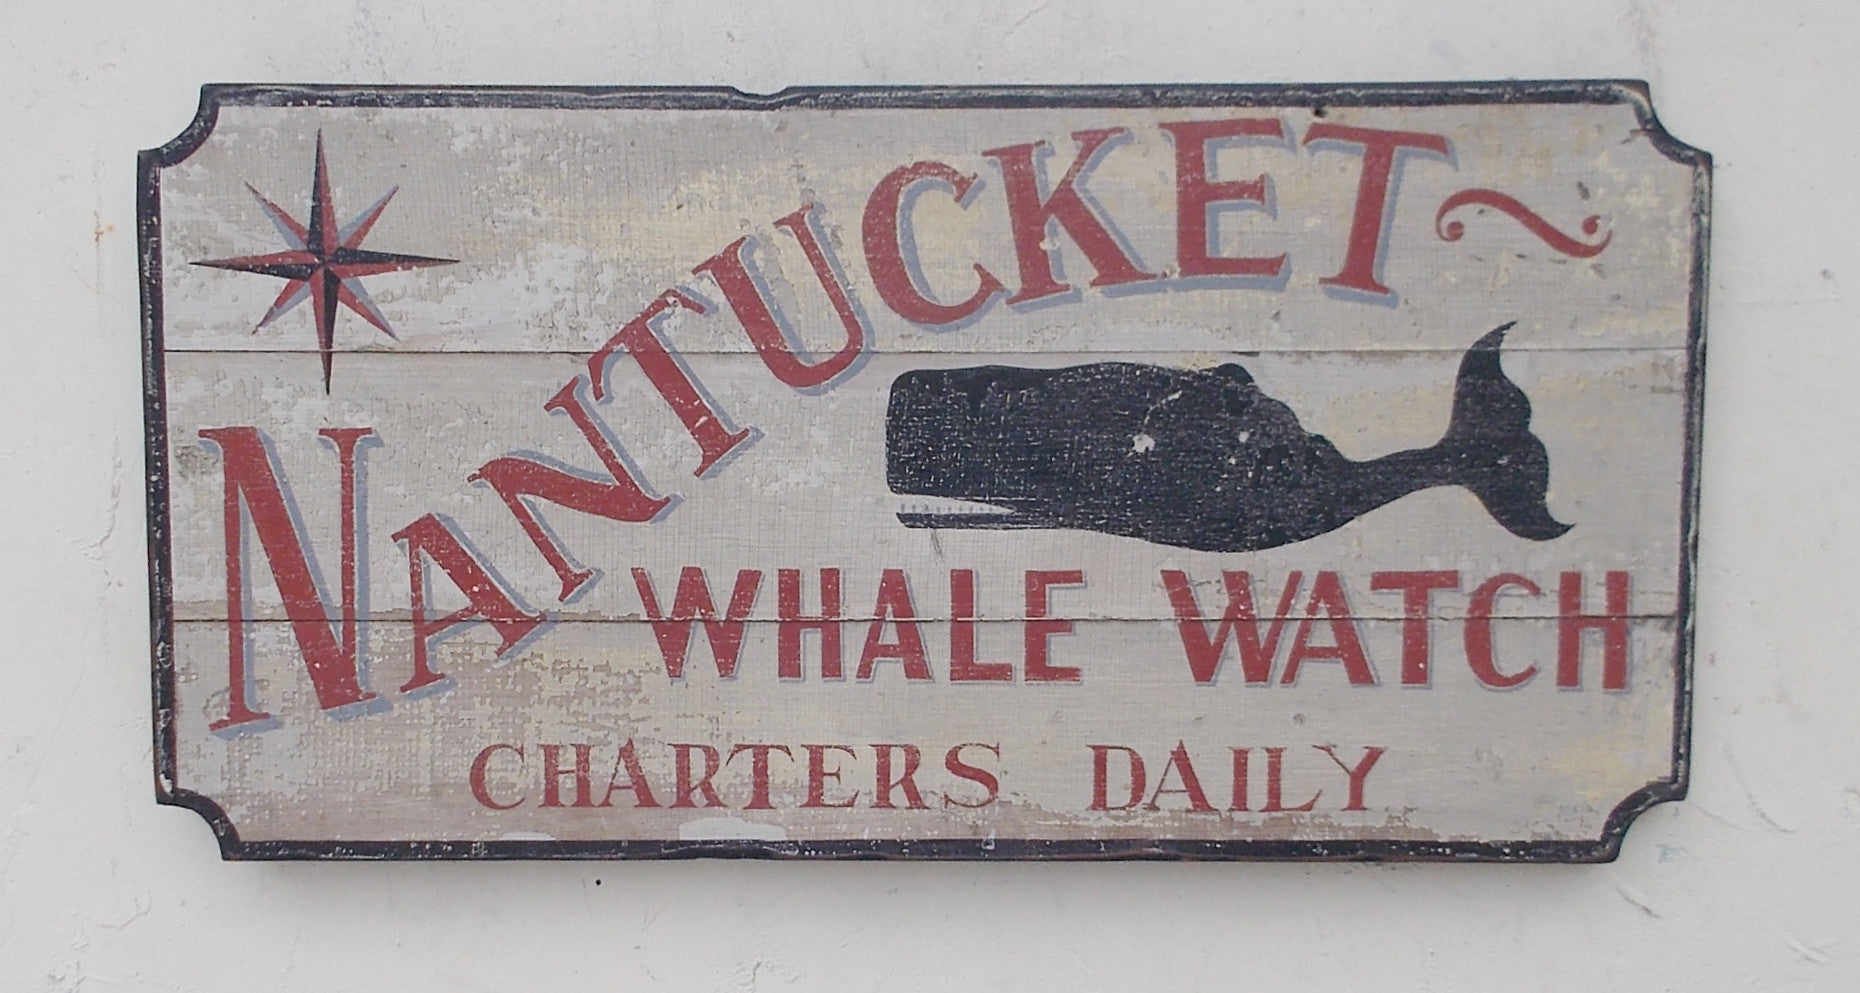 Nantucket Whale Watch